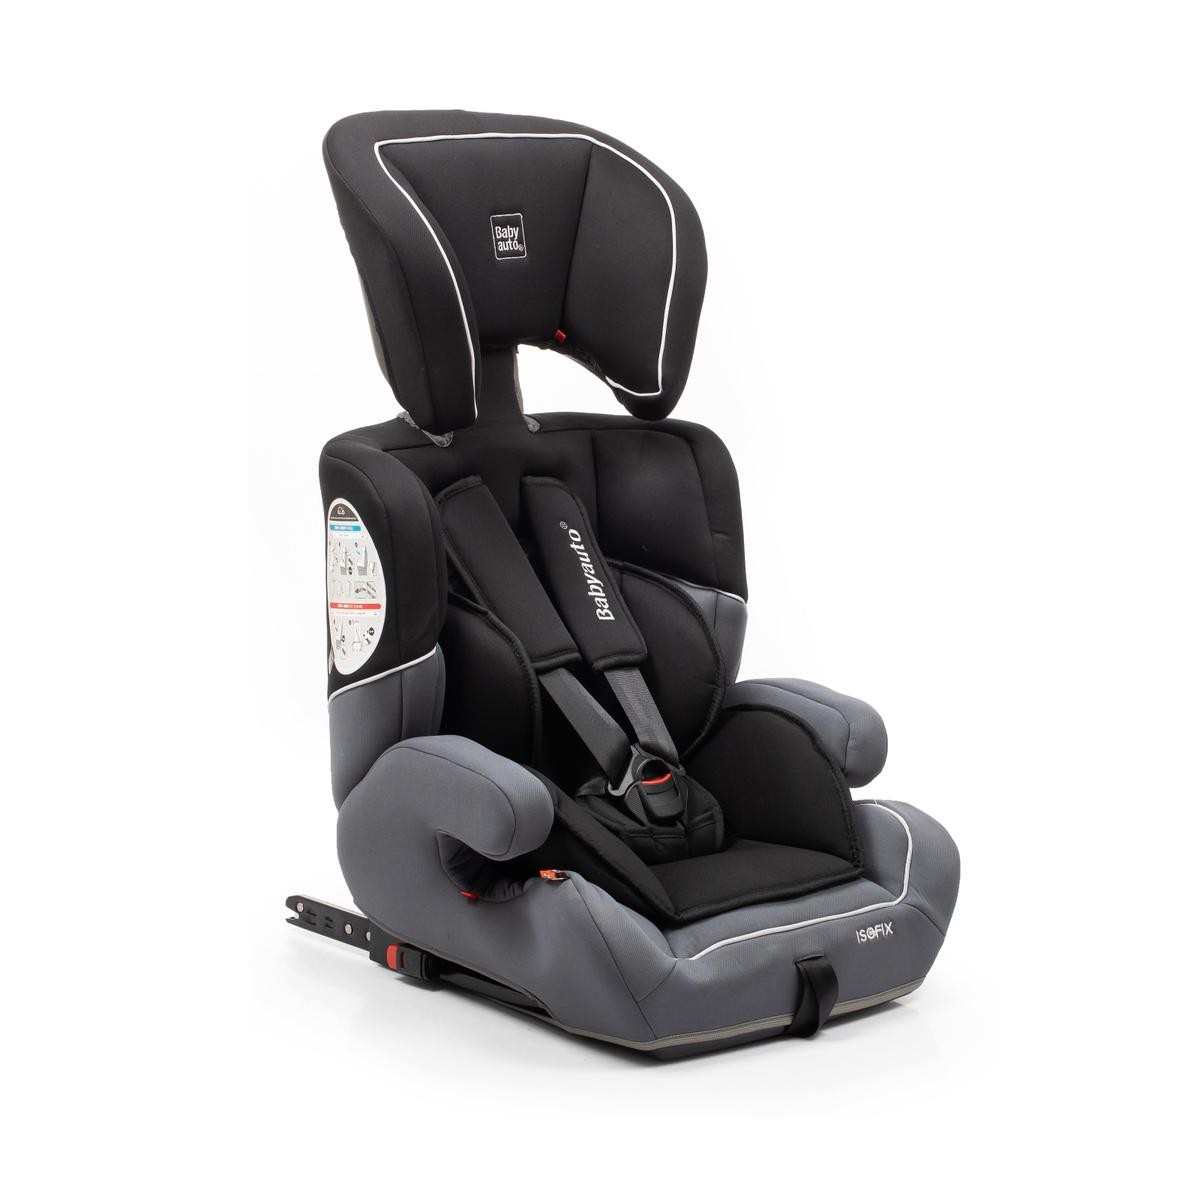 Child seat 3-point harness Babyauto 8435593701508